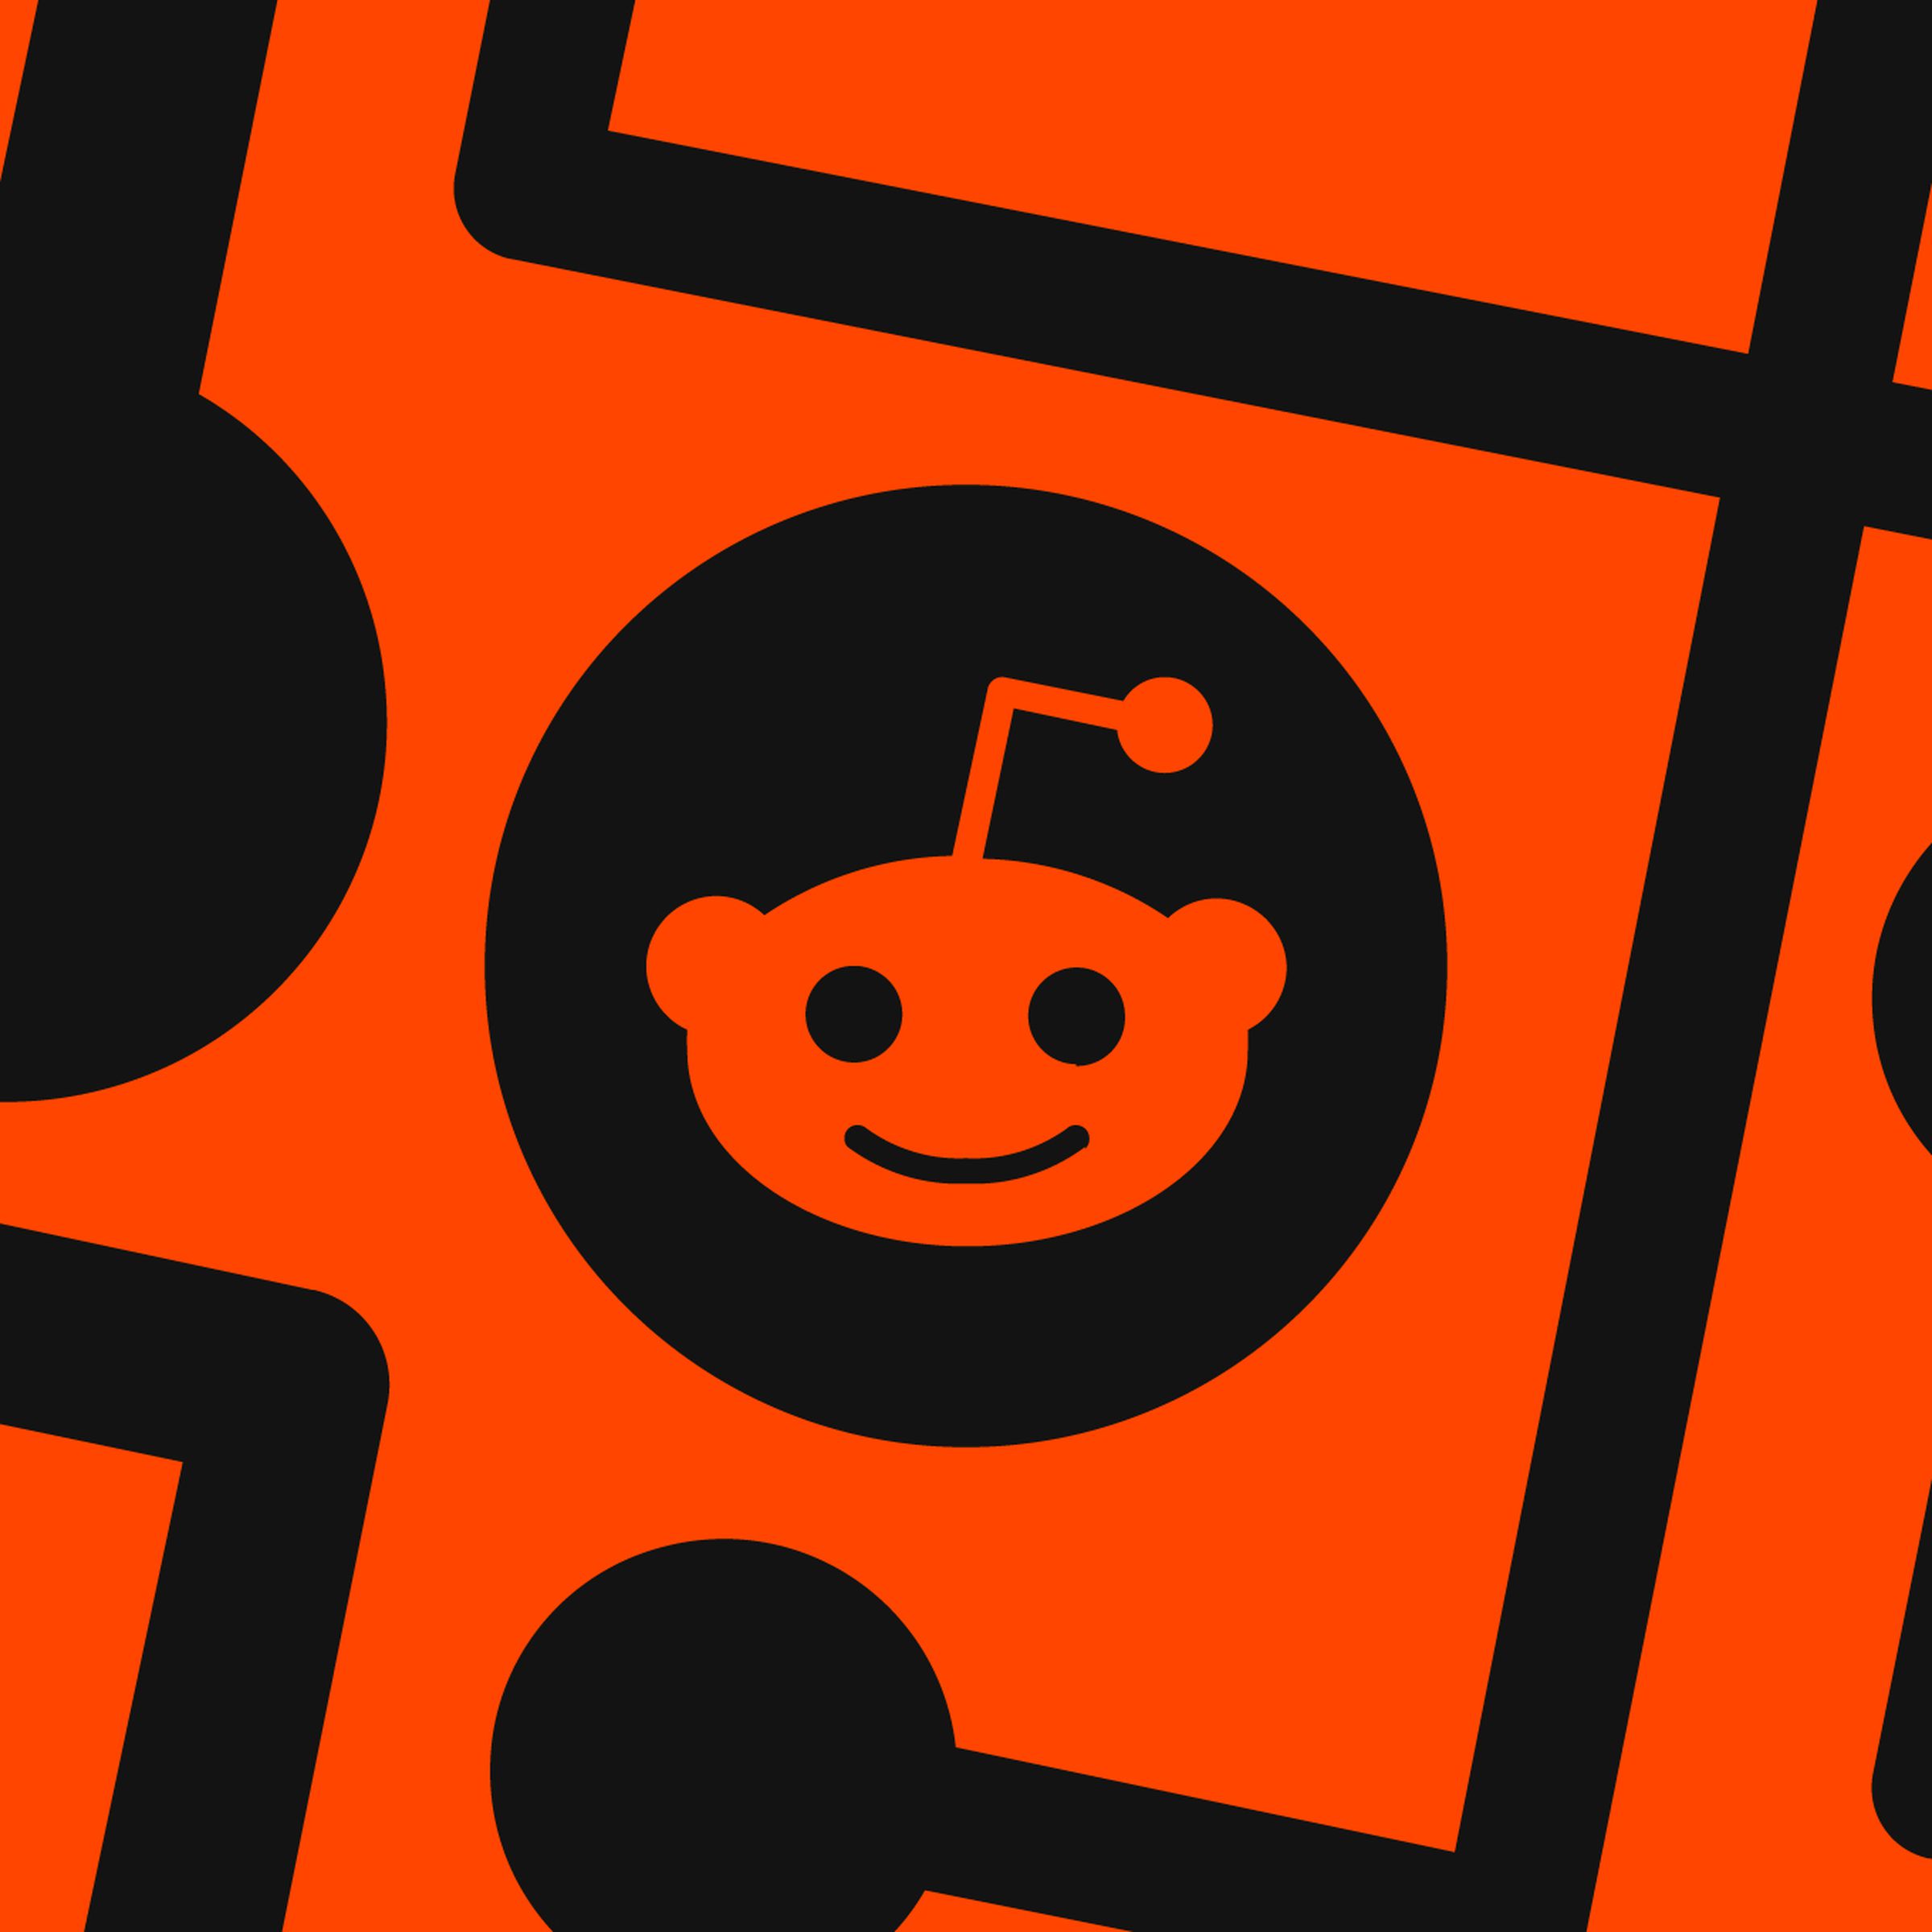 The Reddit logo over an orange and black background